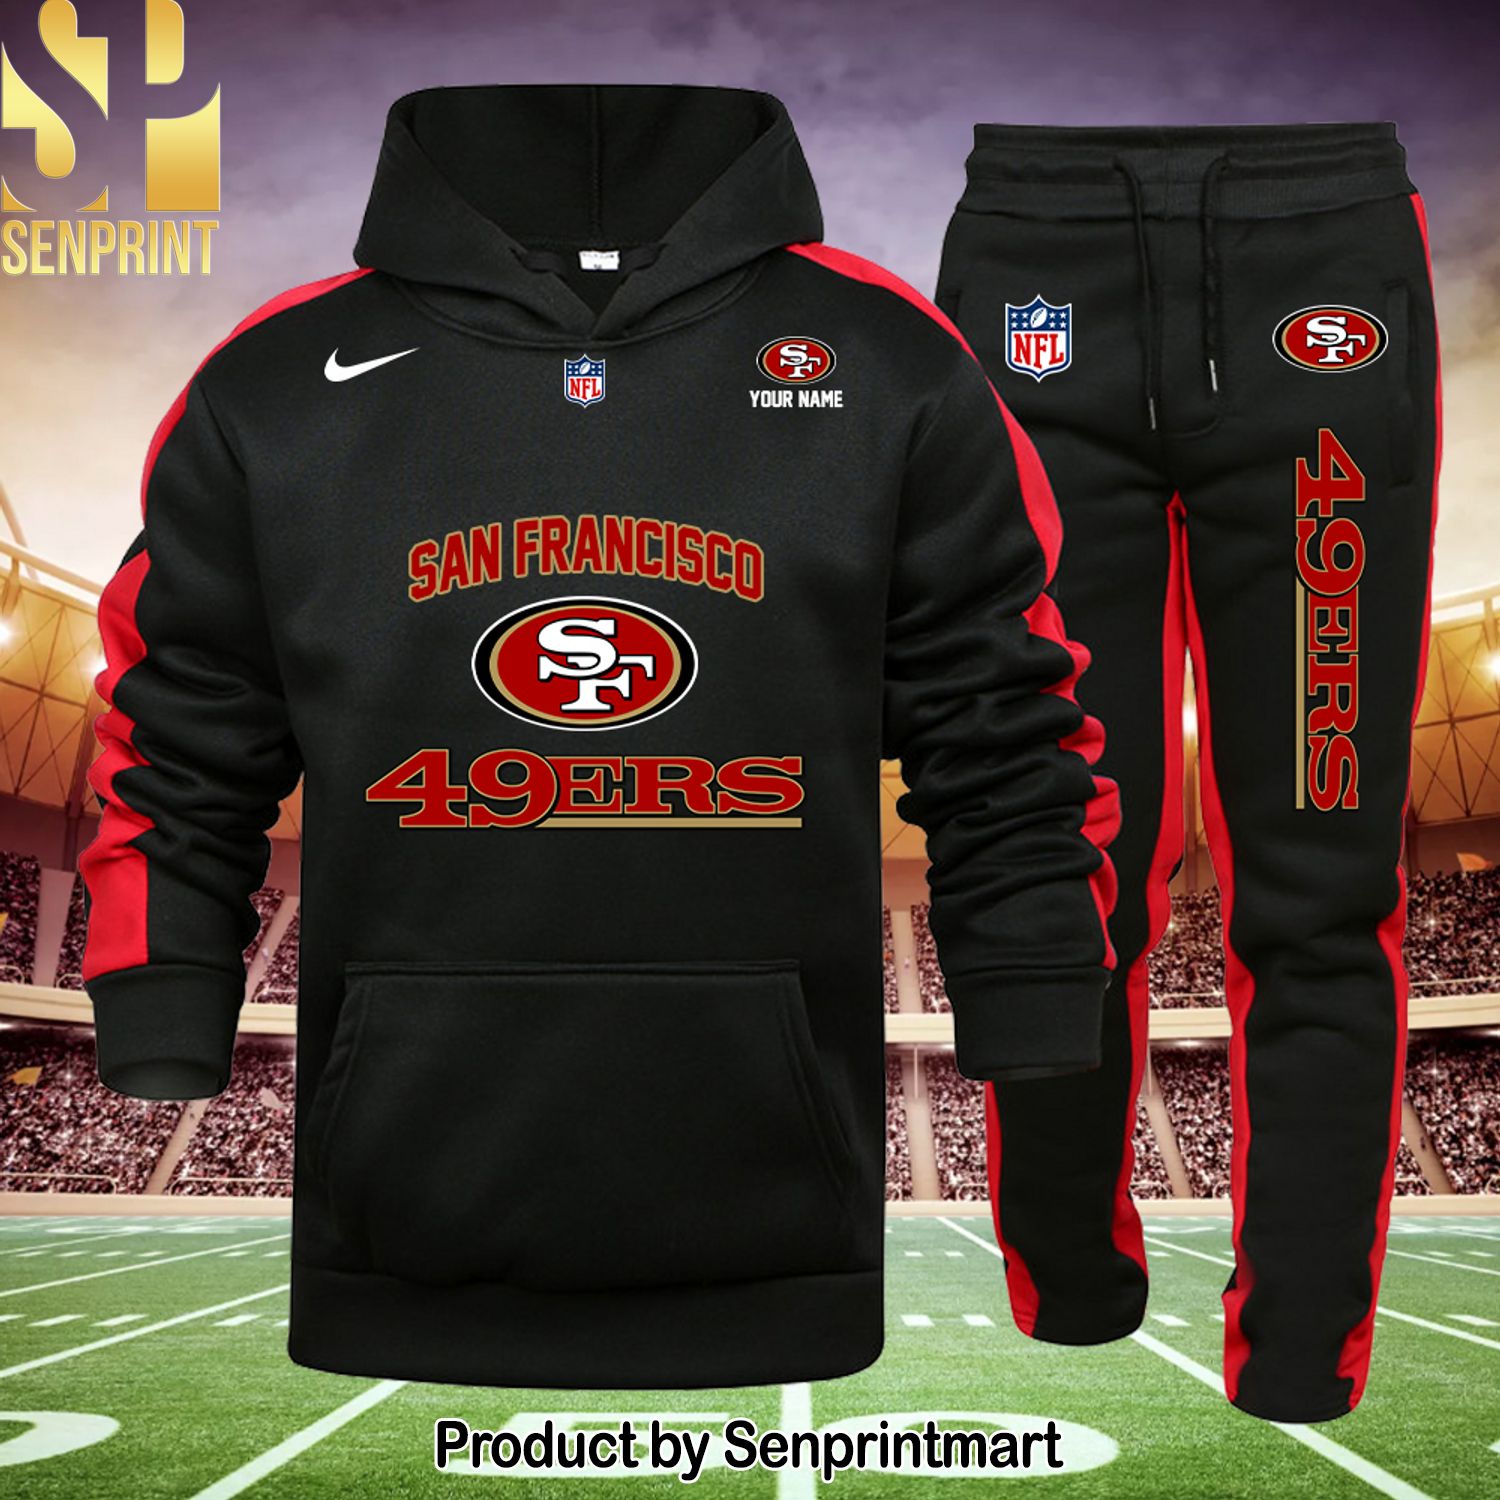 NFL San Francisco 49ers Hypebeast Fashion Shirt and Sweatpants